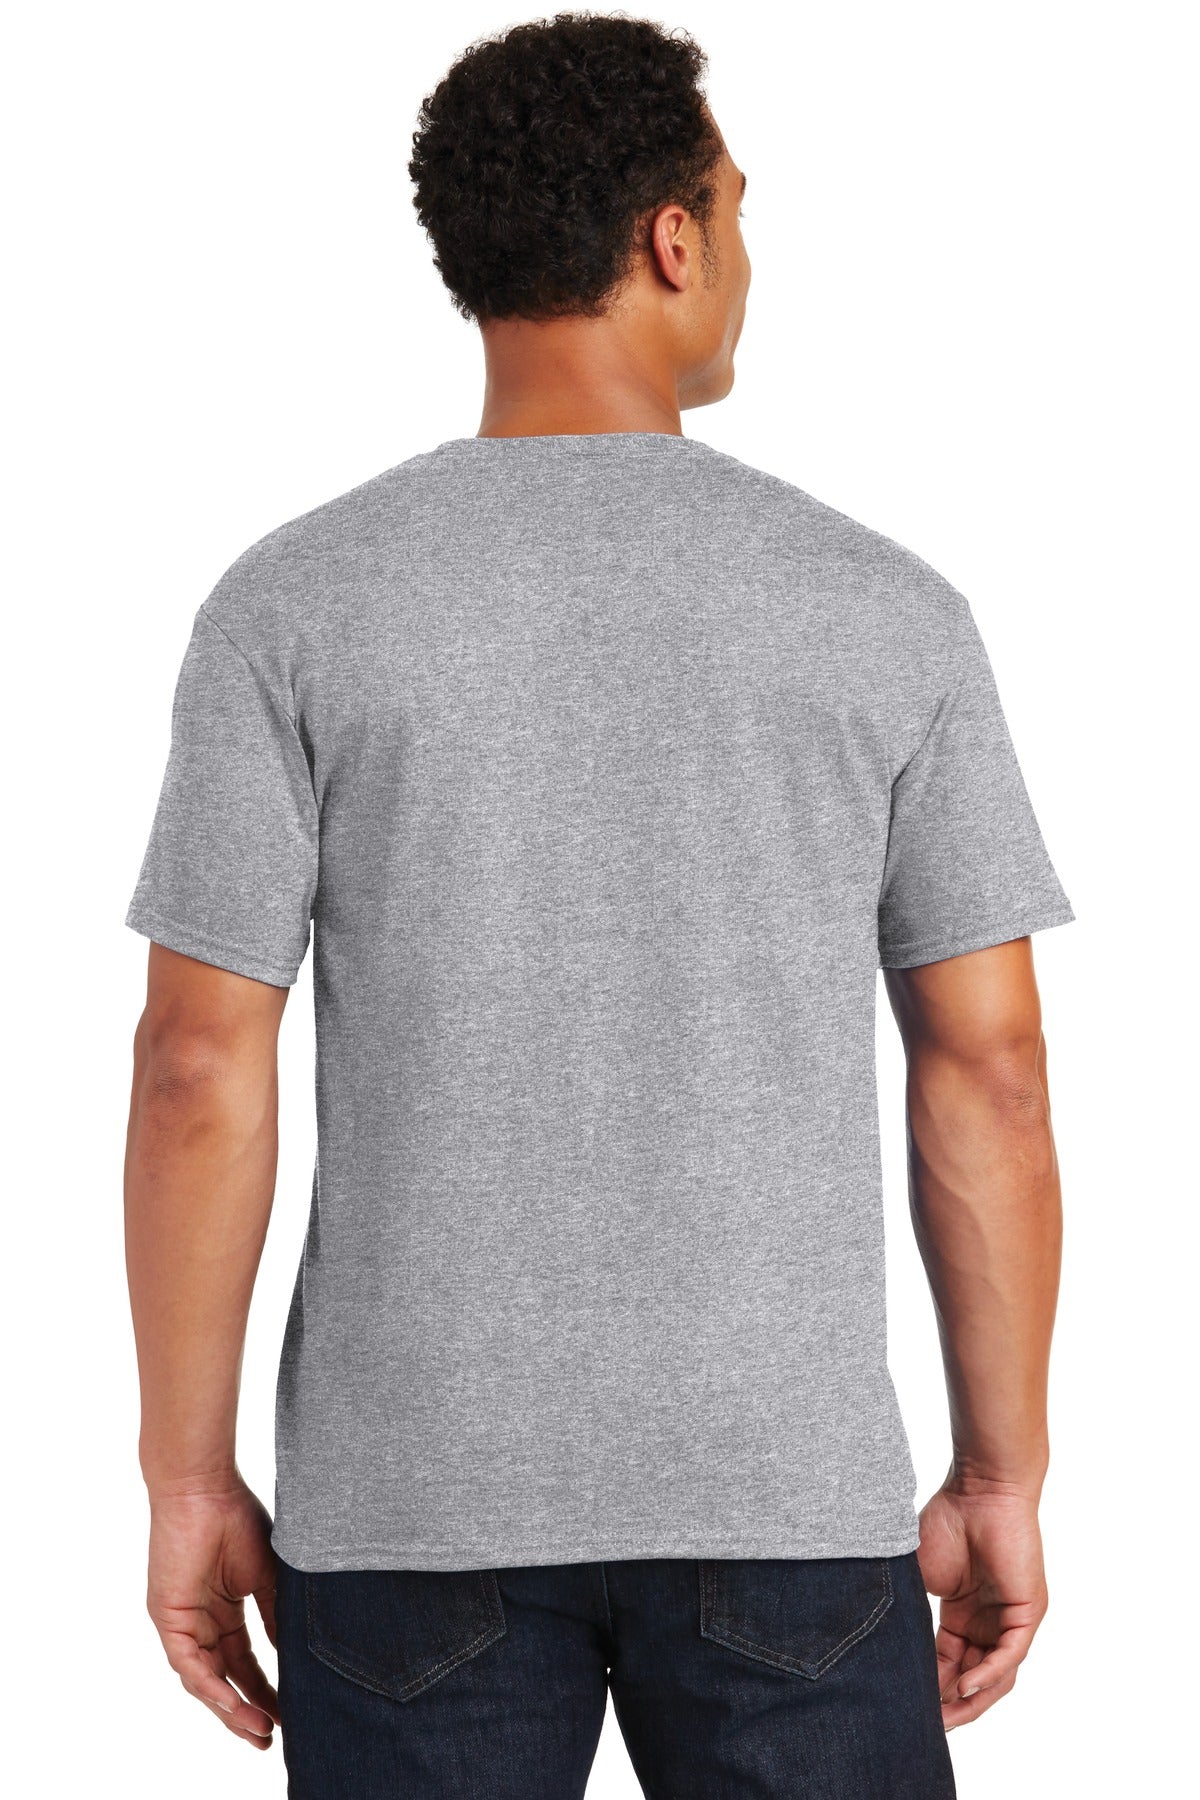 JERZEES® - Dri-Power® 50/50 Cotton/Poly T-Shirt. 29M [Athletic Heather] - DFW Impression